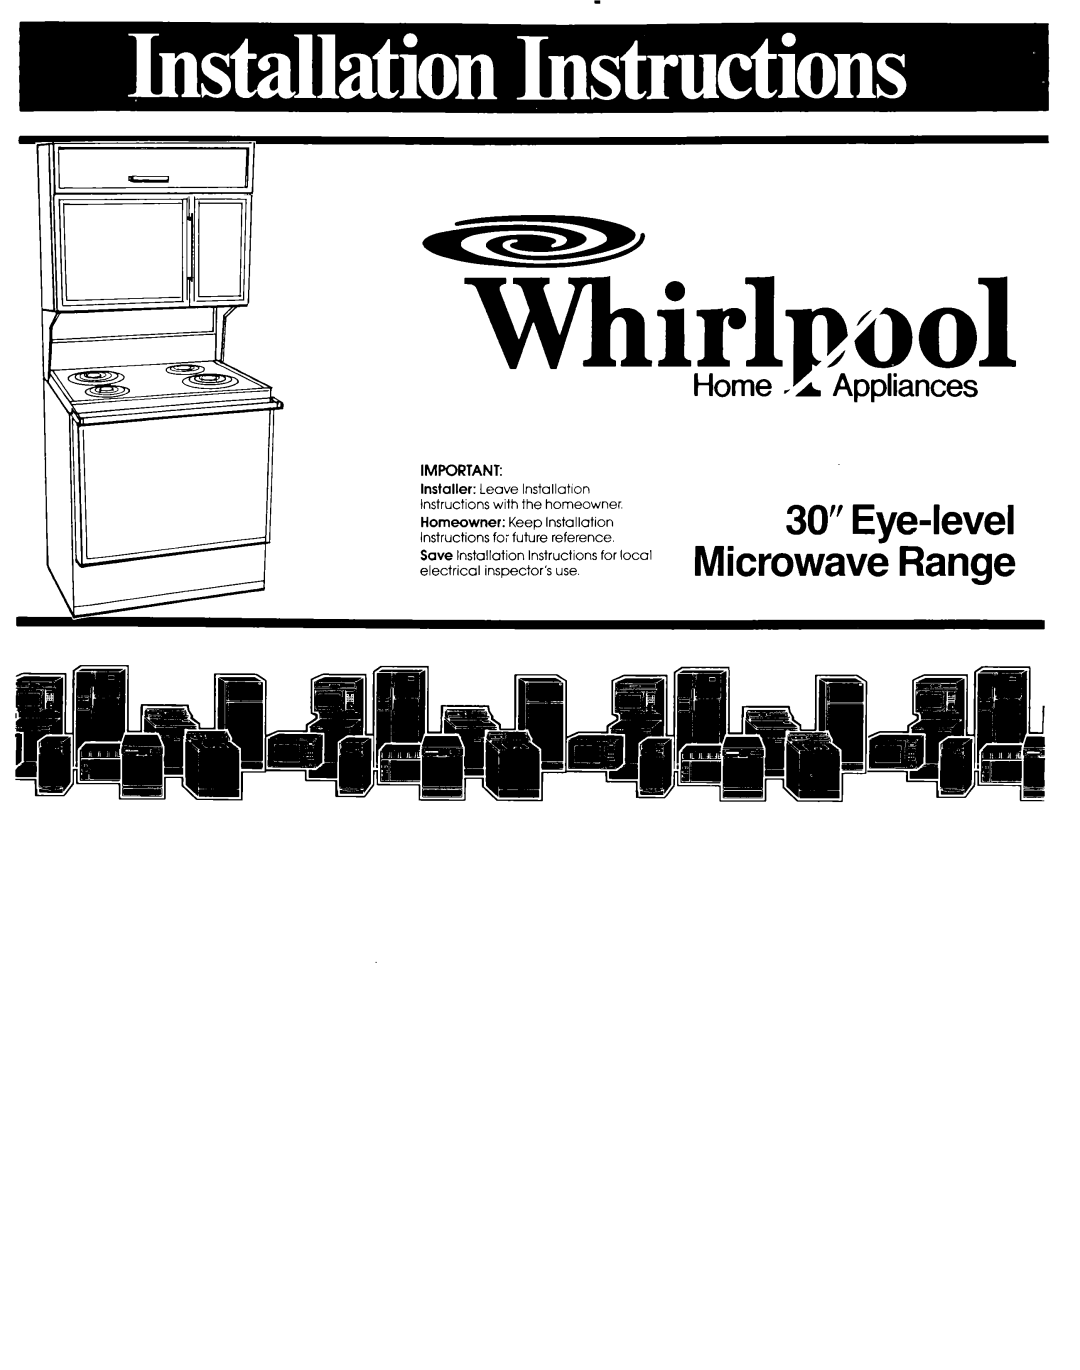 Whirlpool installation instructions Home -AAppliances, Whirlpool, 30” Eye-levelMicrowave Range 